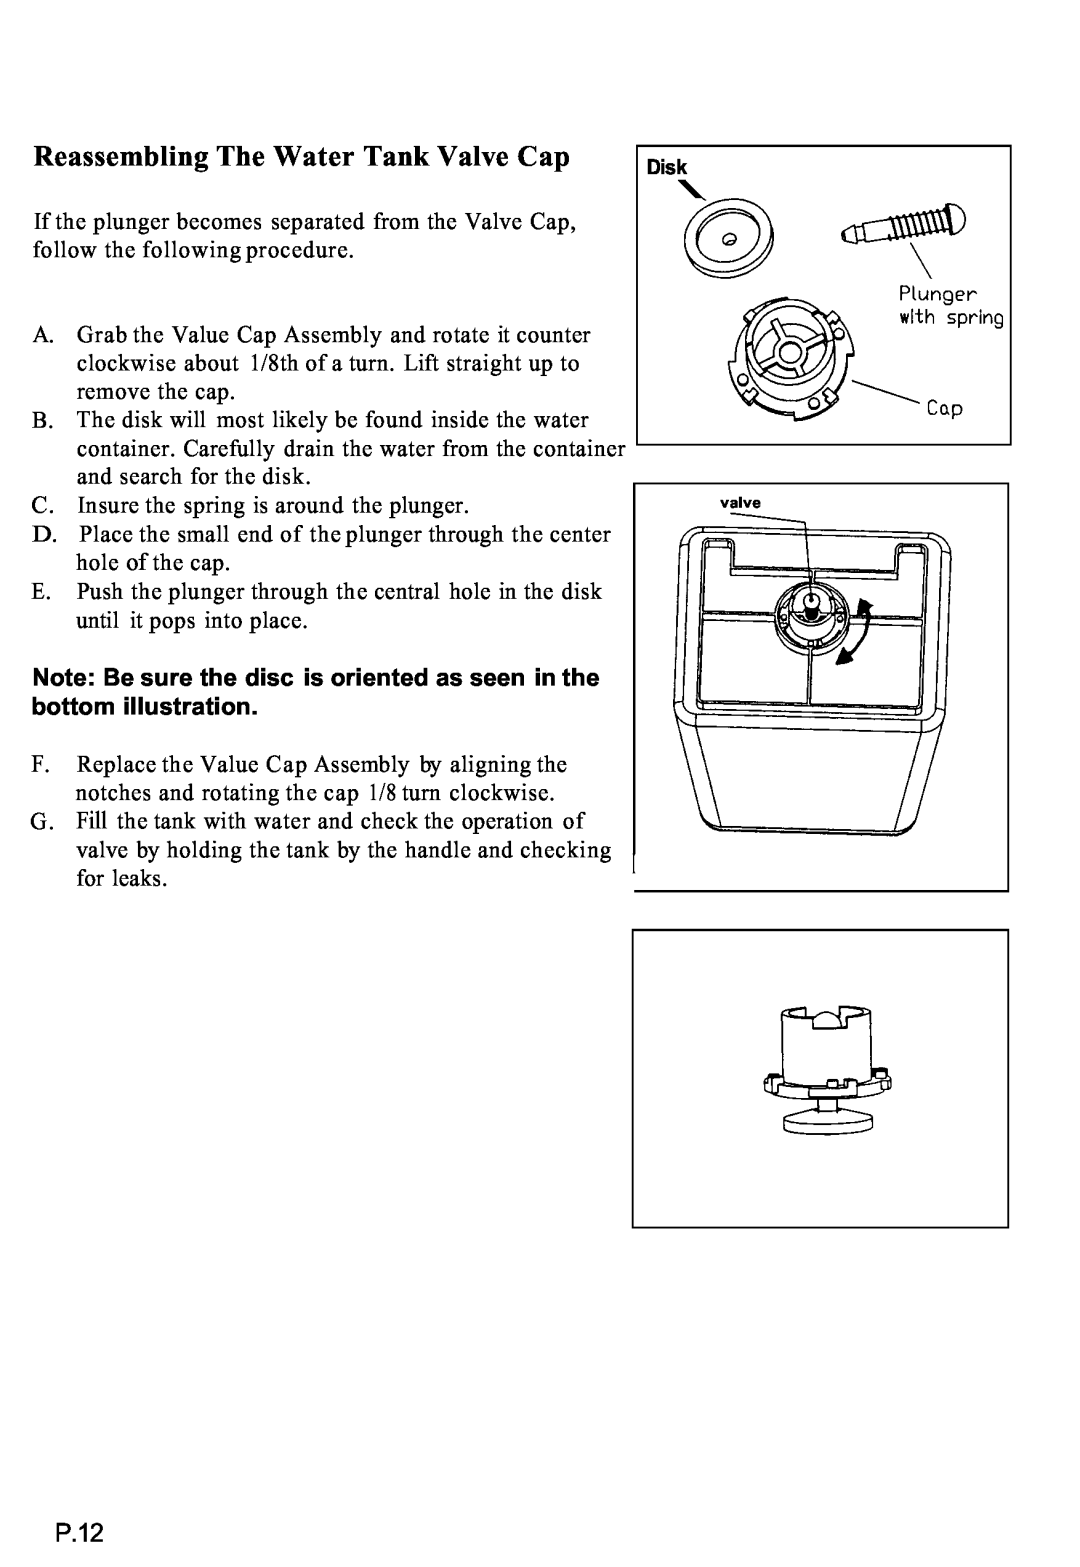 Top Innovations SP-350 manual Reassembling The Water Tank Valve Cap, P.12 